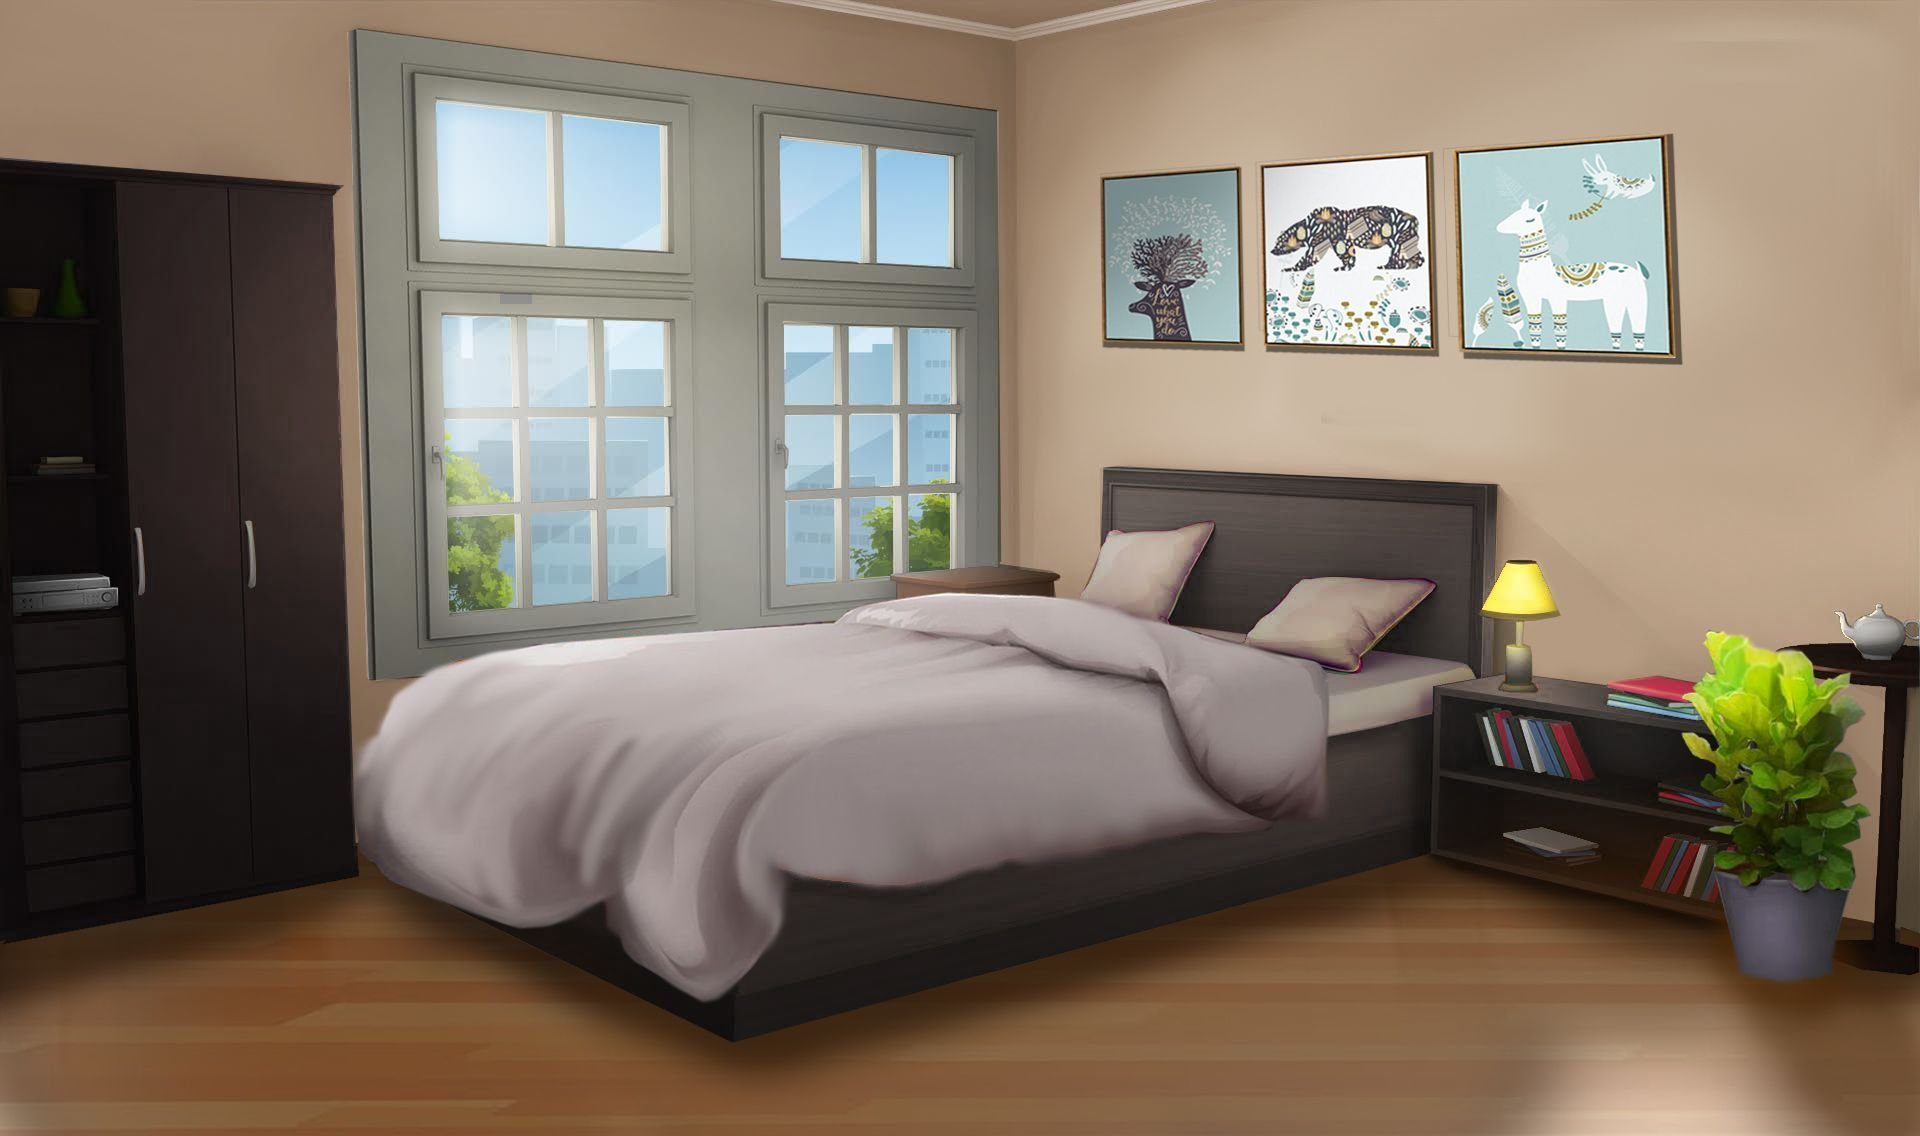 Аниме спальня для гача лайф - картинки, фото и рисунки.